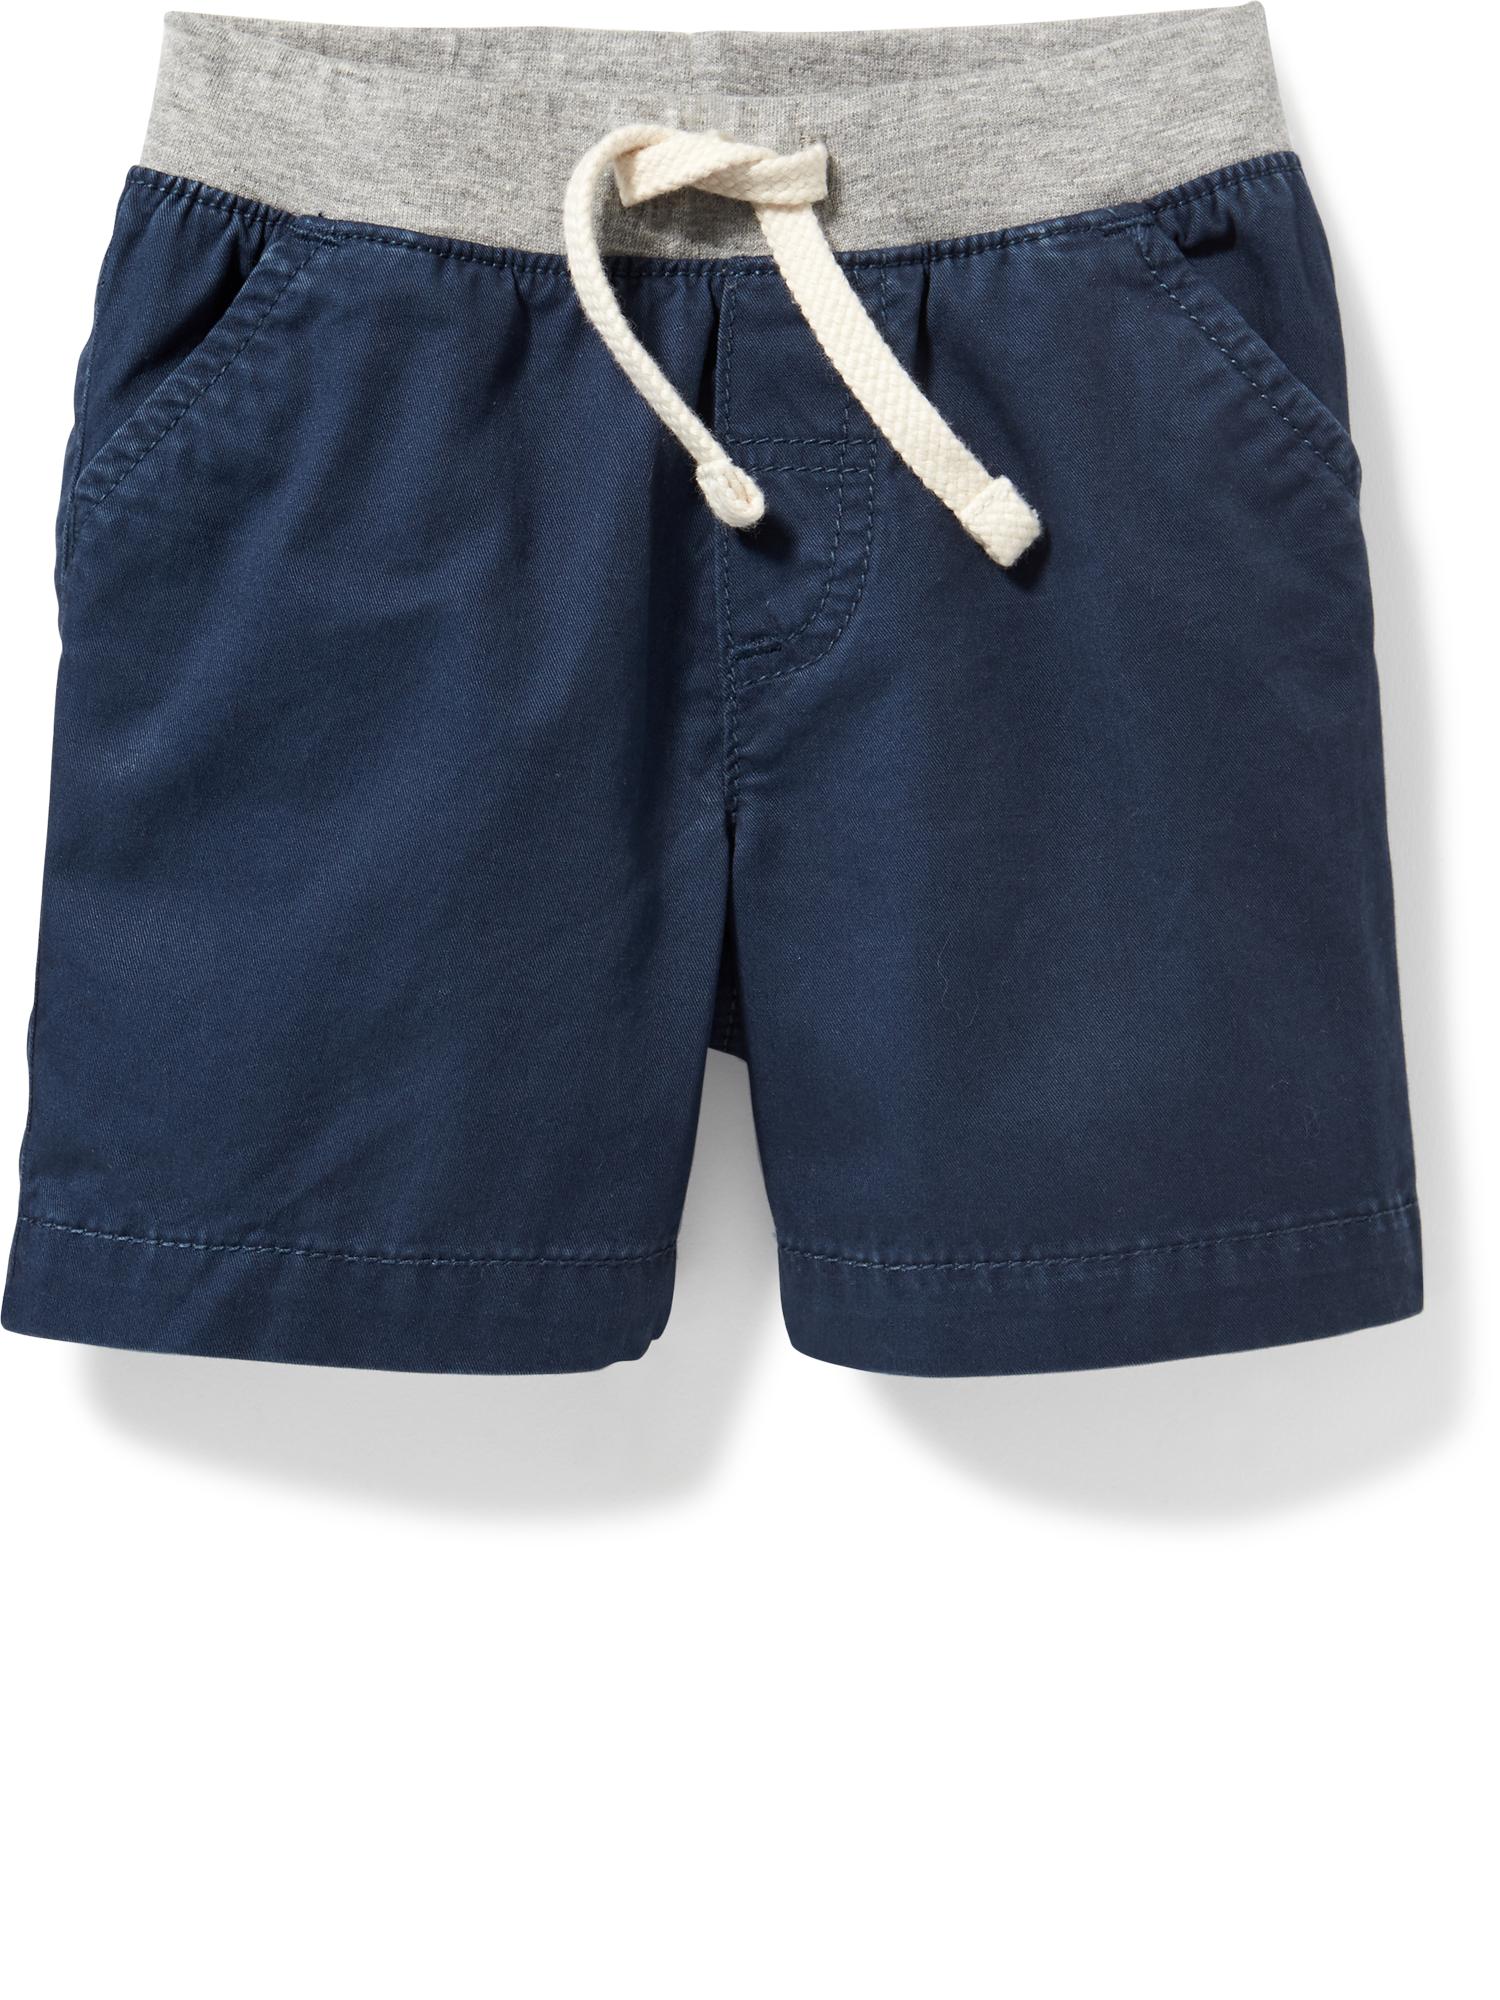 Drawstring Twill Shorts for Baby | Old Navy